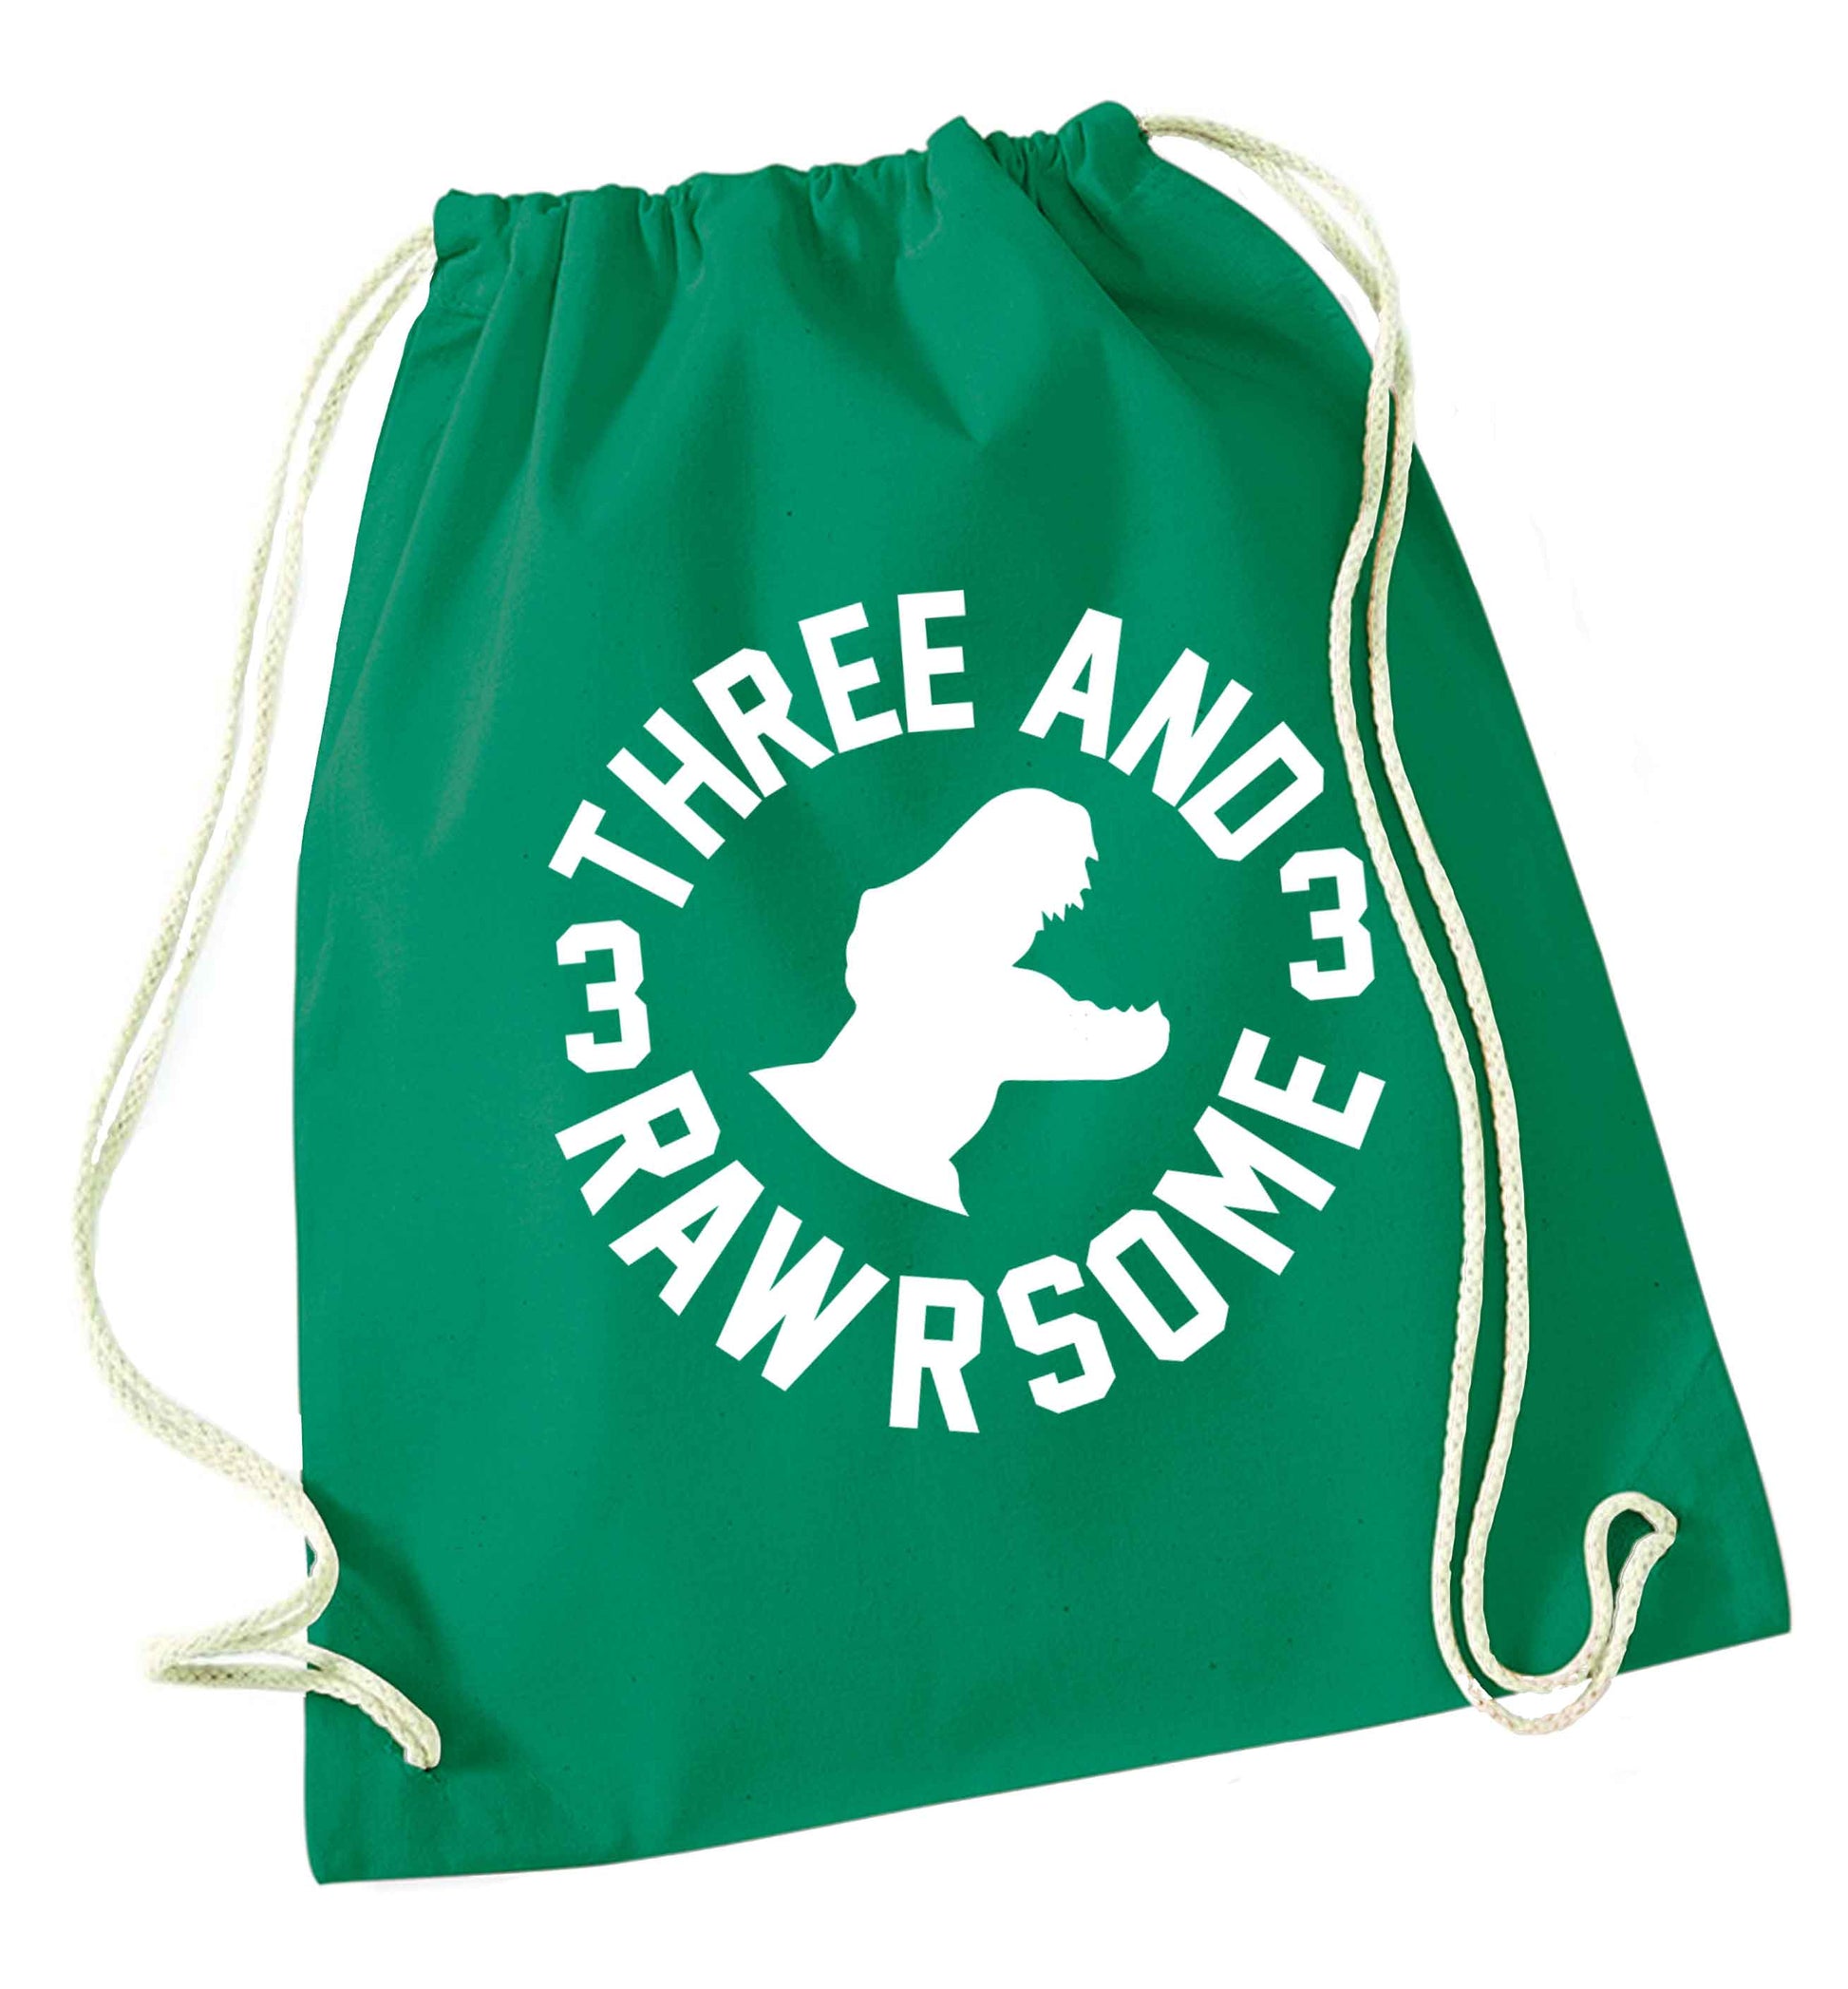 Three and rawrsome green drawstring bag